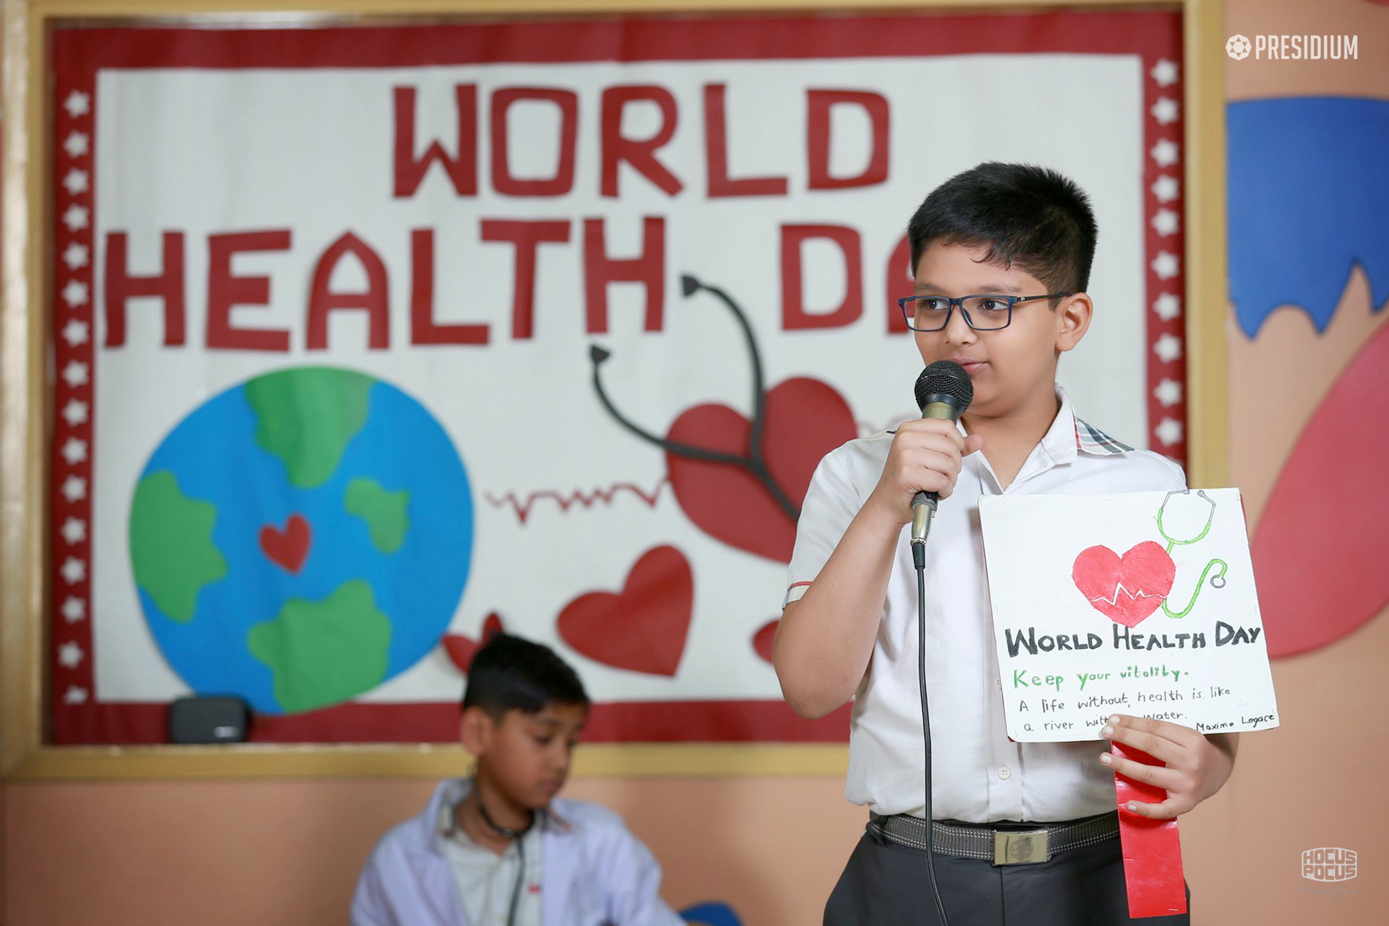 Presidium Pitampura, WORLD HEALTH DAY: CELEBRATING A HEALTHY LIFESTYLE!